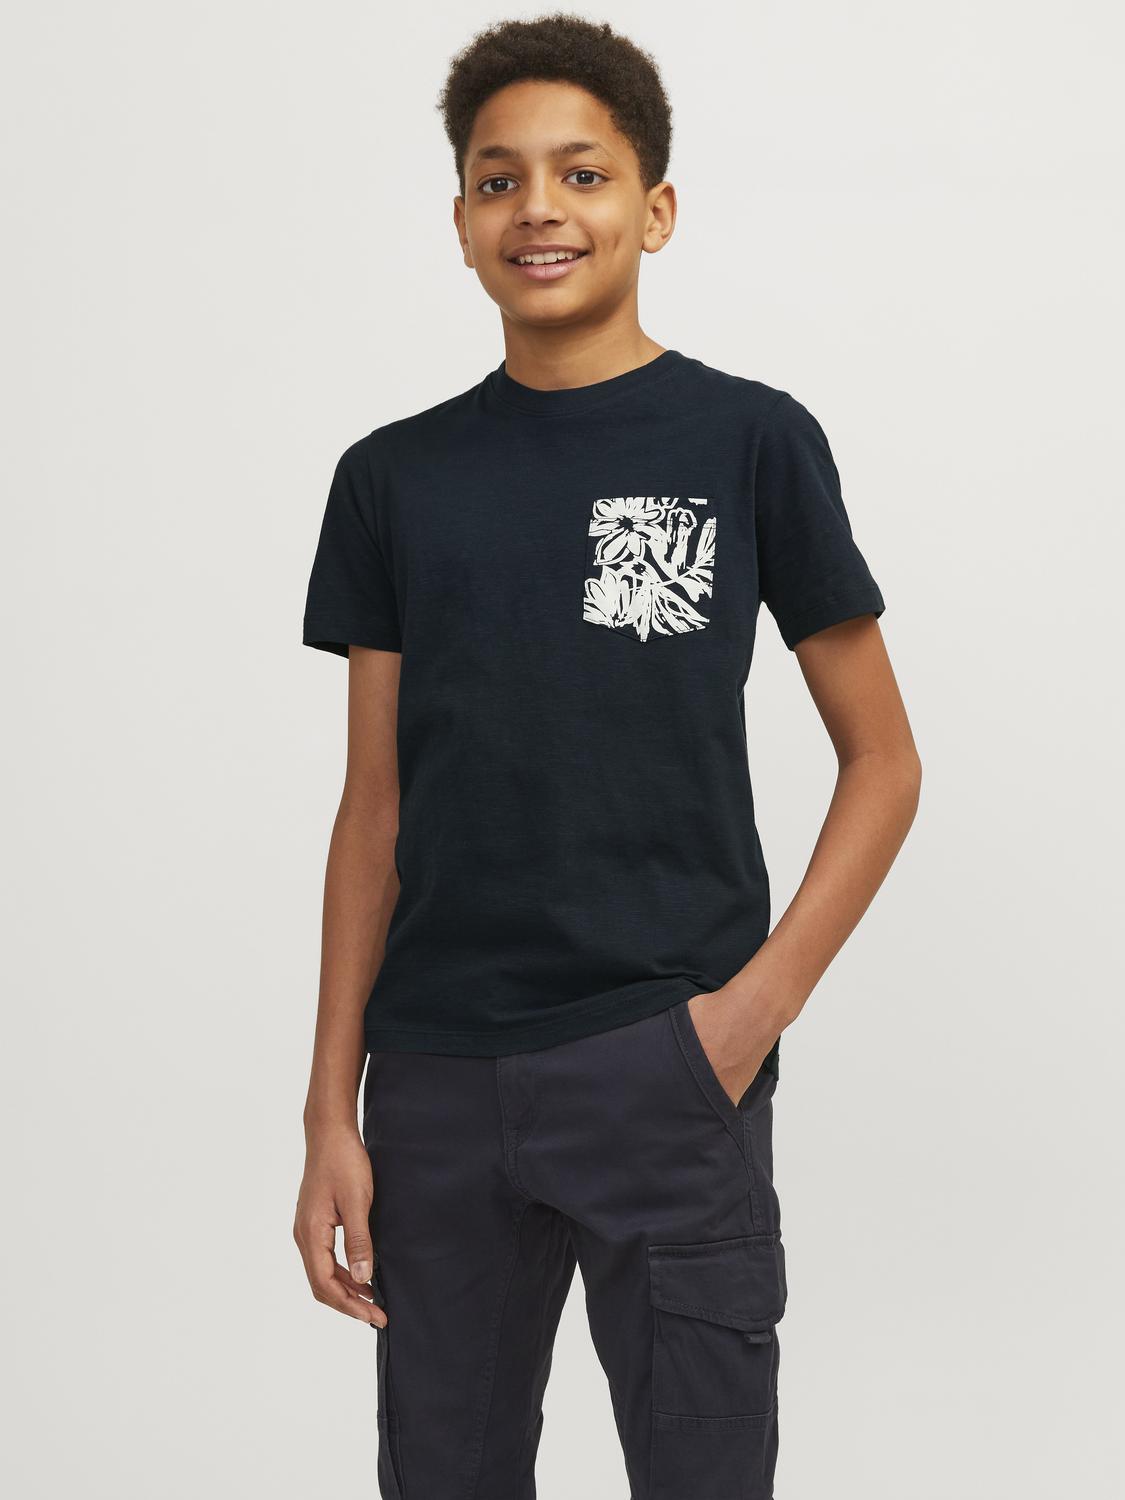 Jack & Jones Bedrukt T-shirt Mini -Sky Captain - 12257434